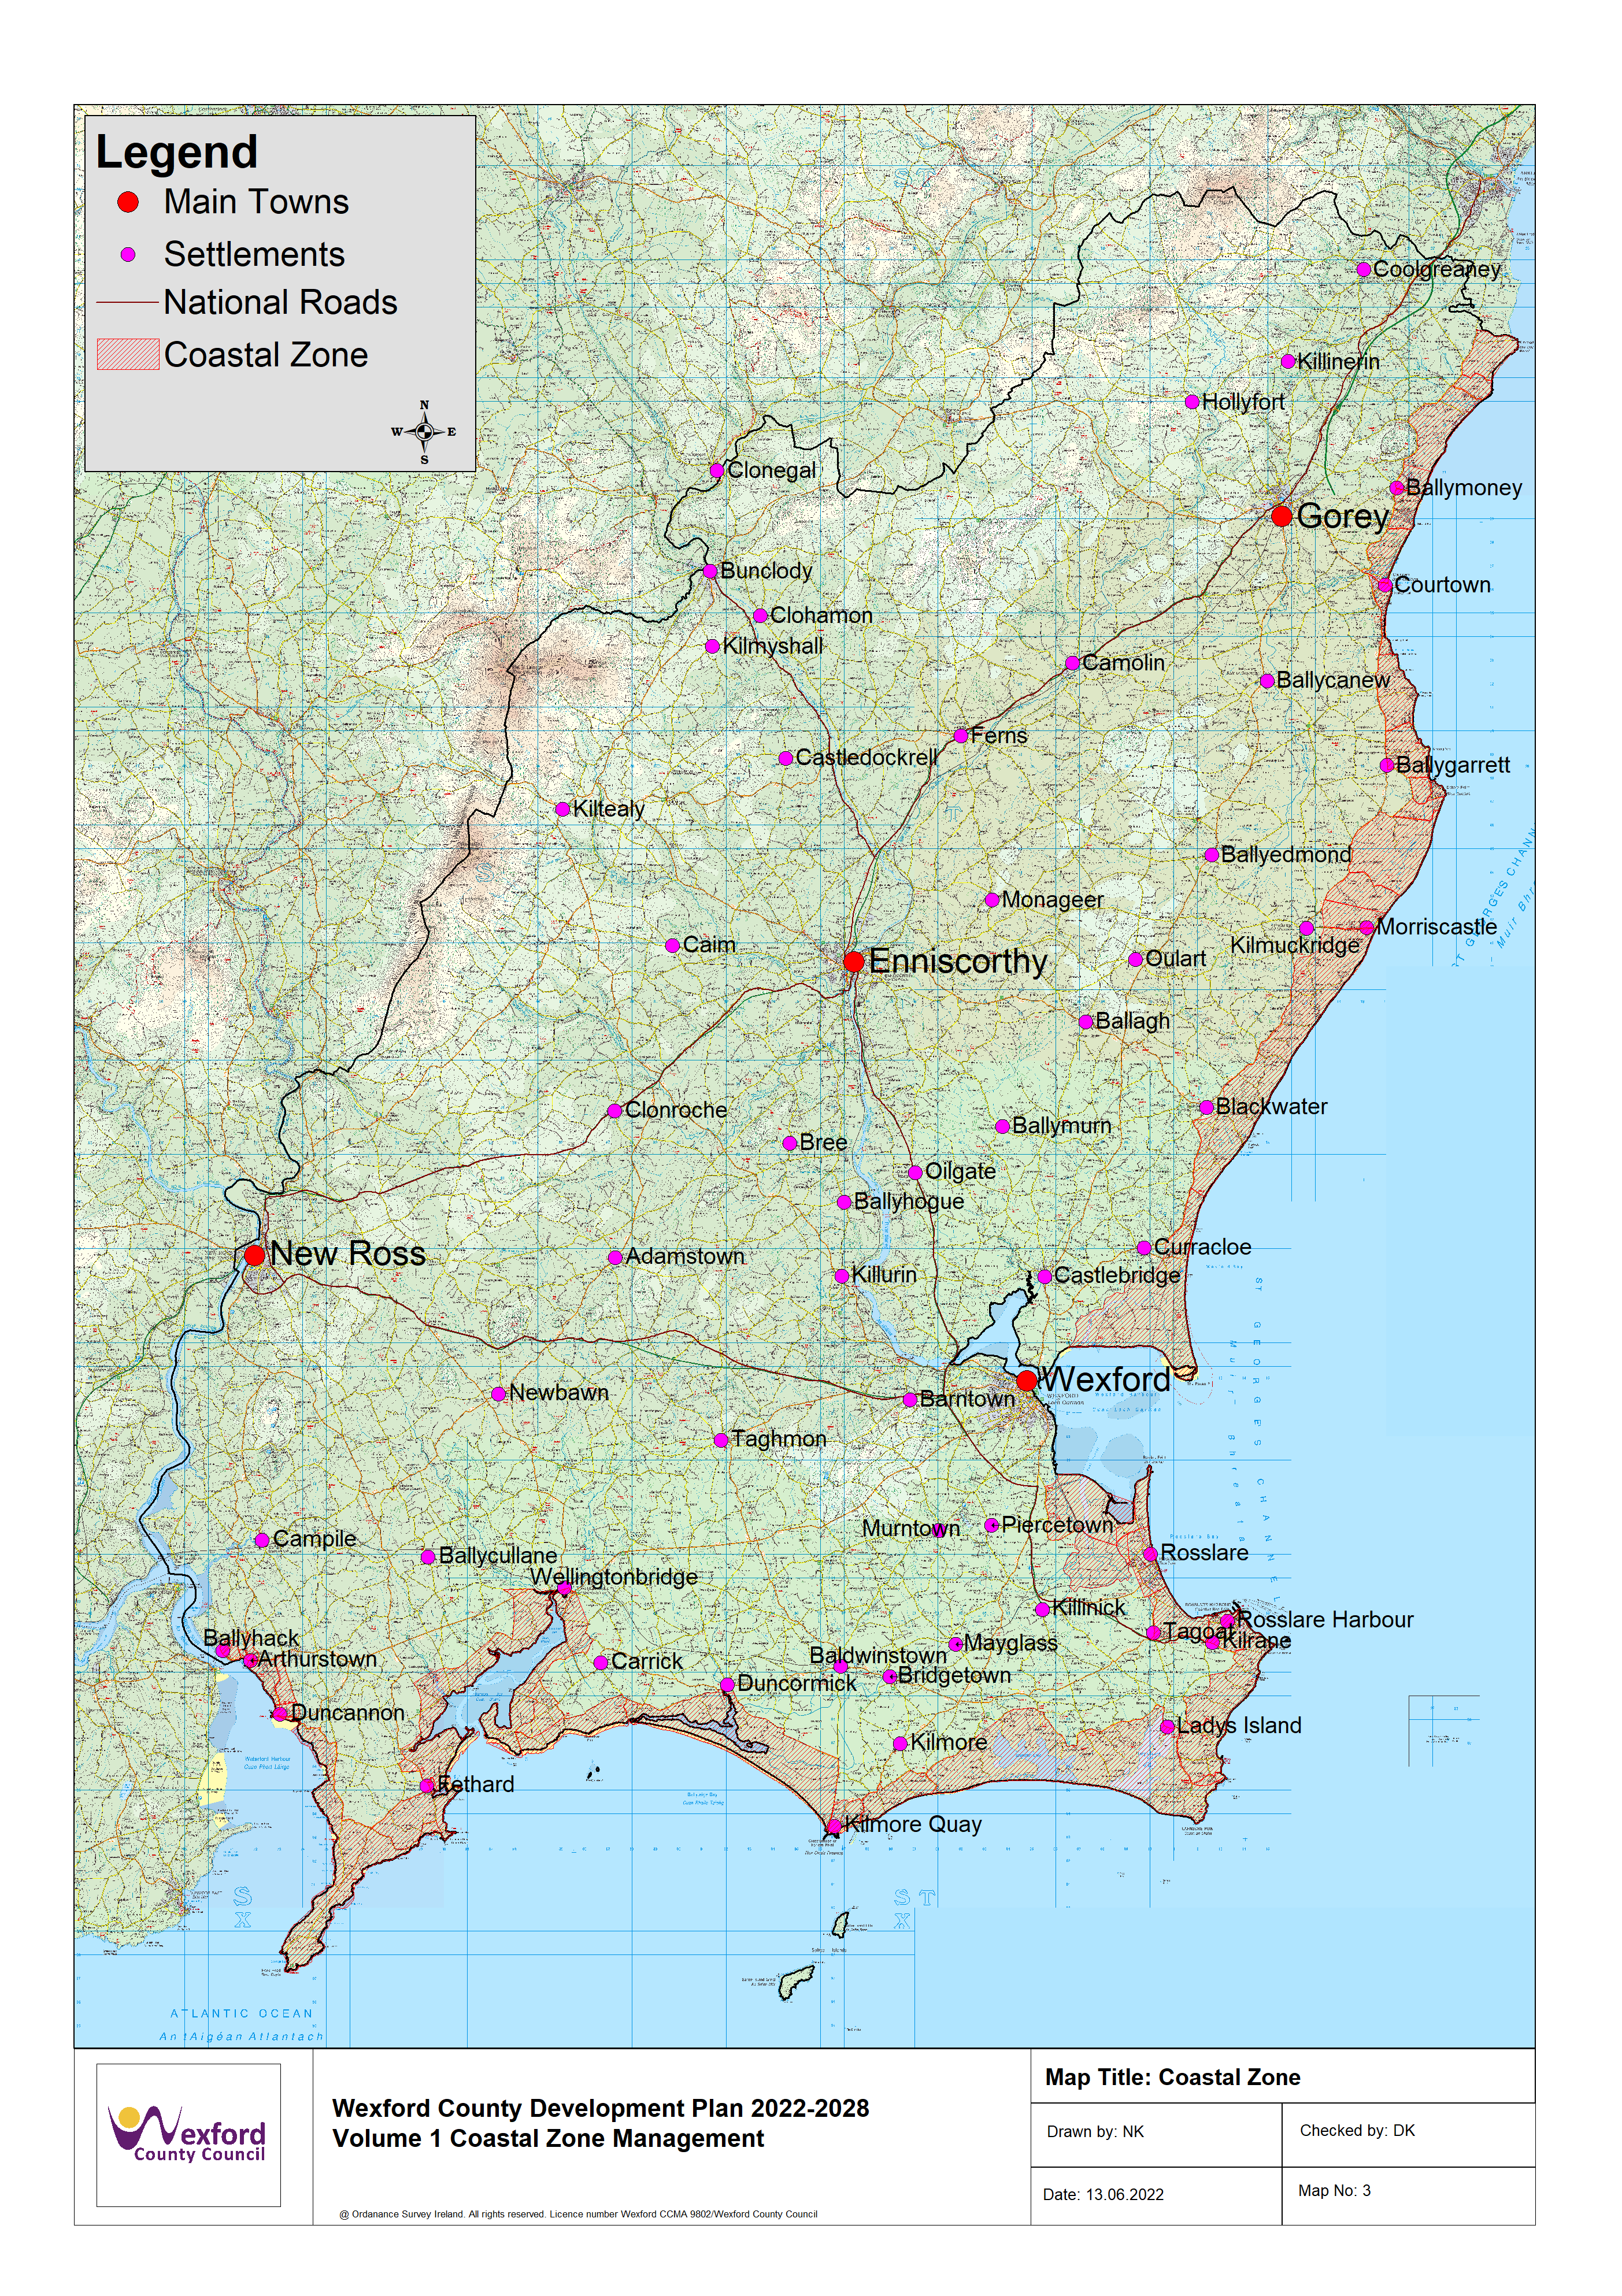 Map 3: Coastal Zone